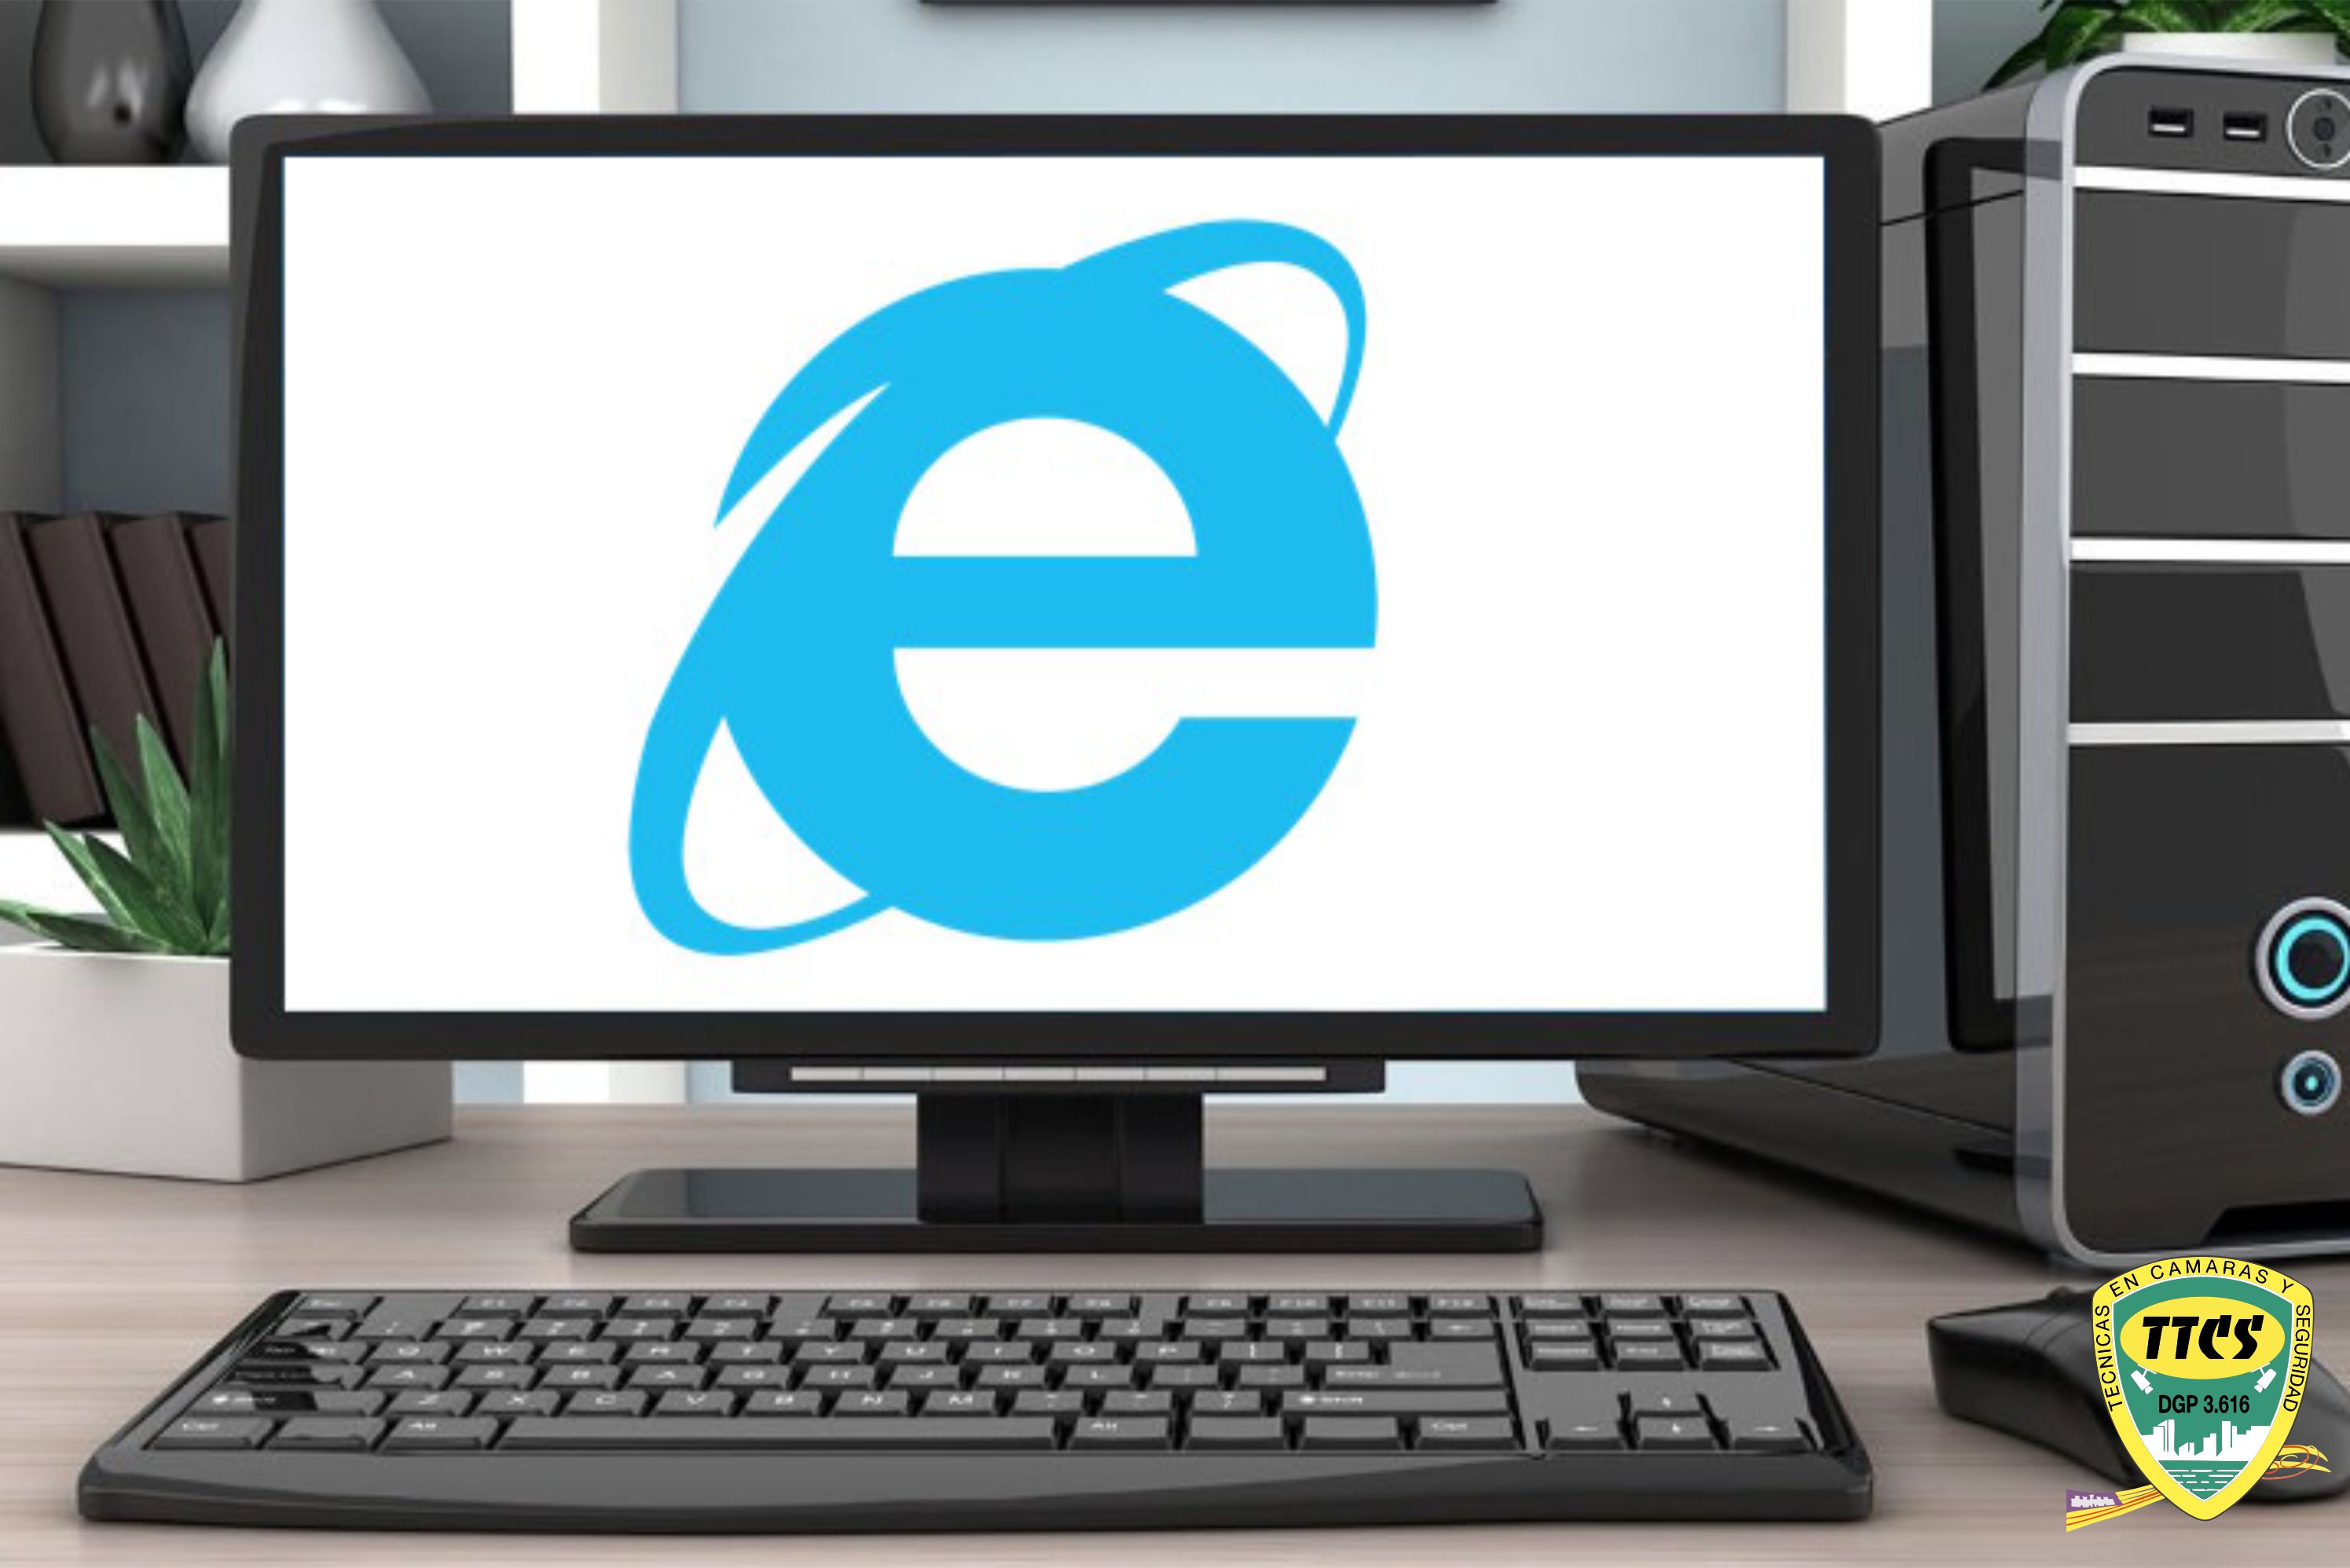 Internet Explorer vulnerable